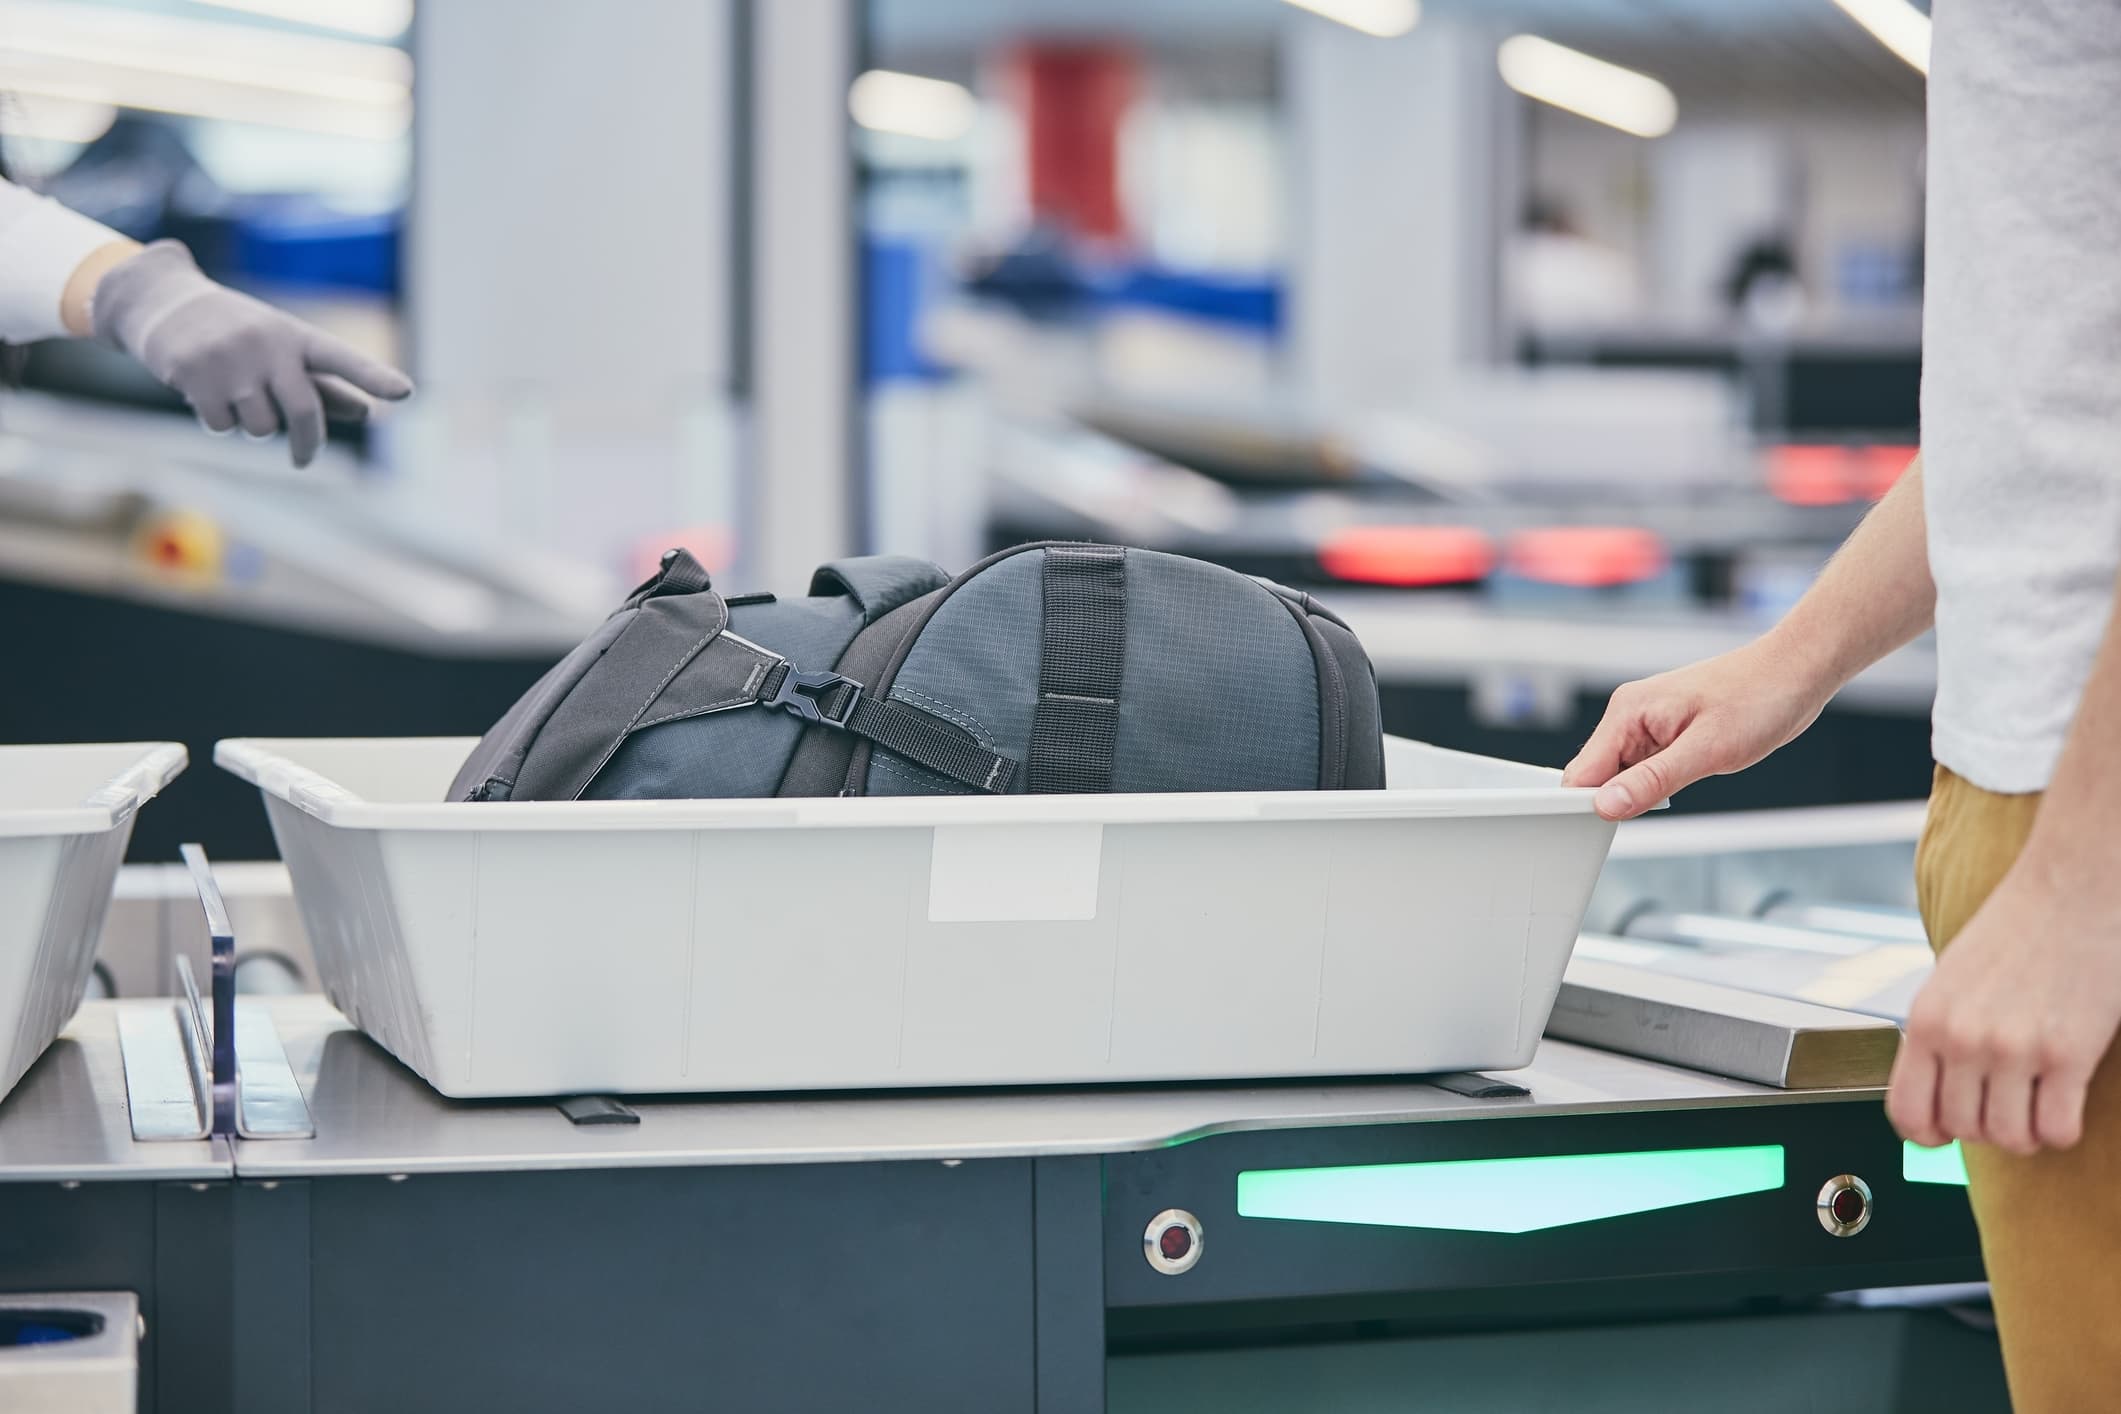 An airport security bin holds a passenger's bag awaiting x-ray